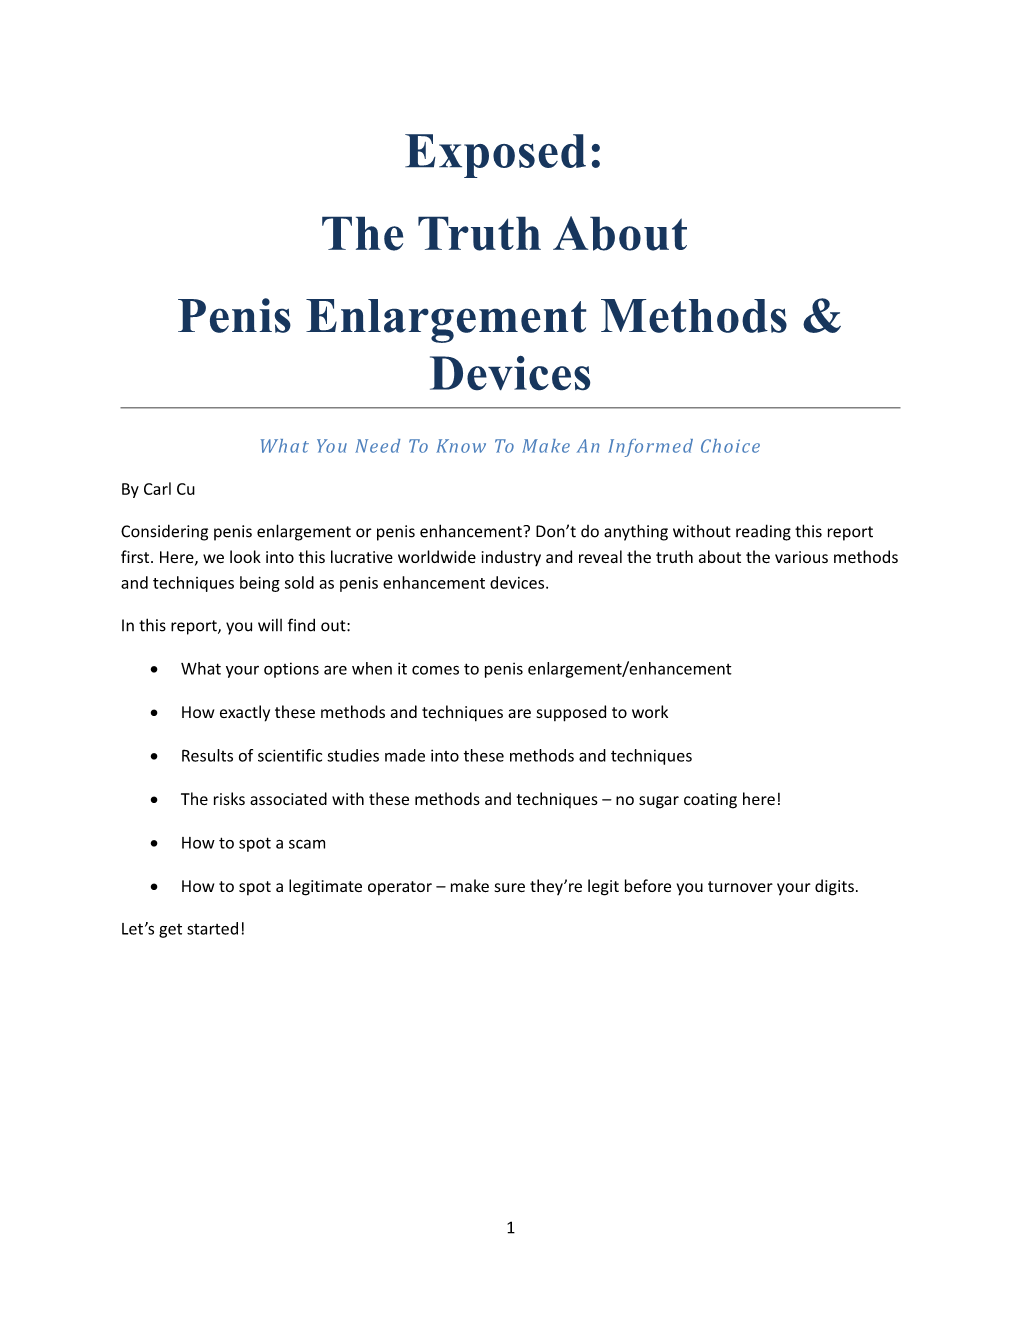 Penis Enlargement Methods & Devices